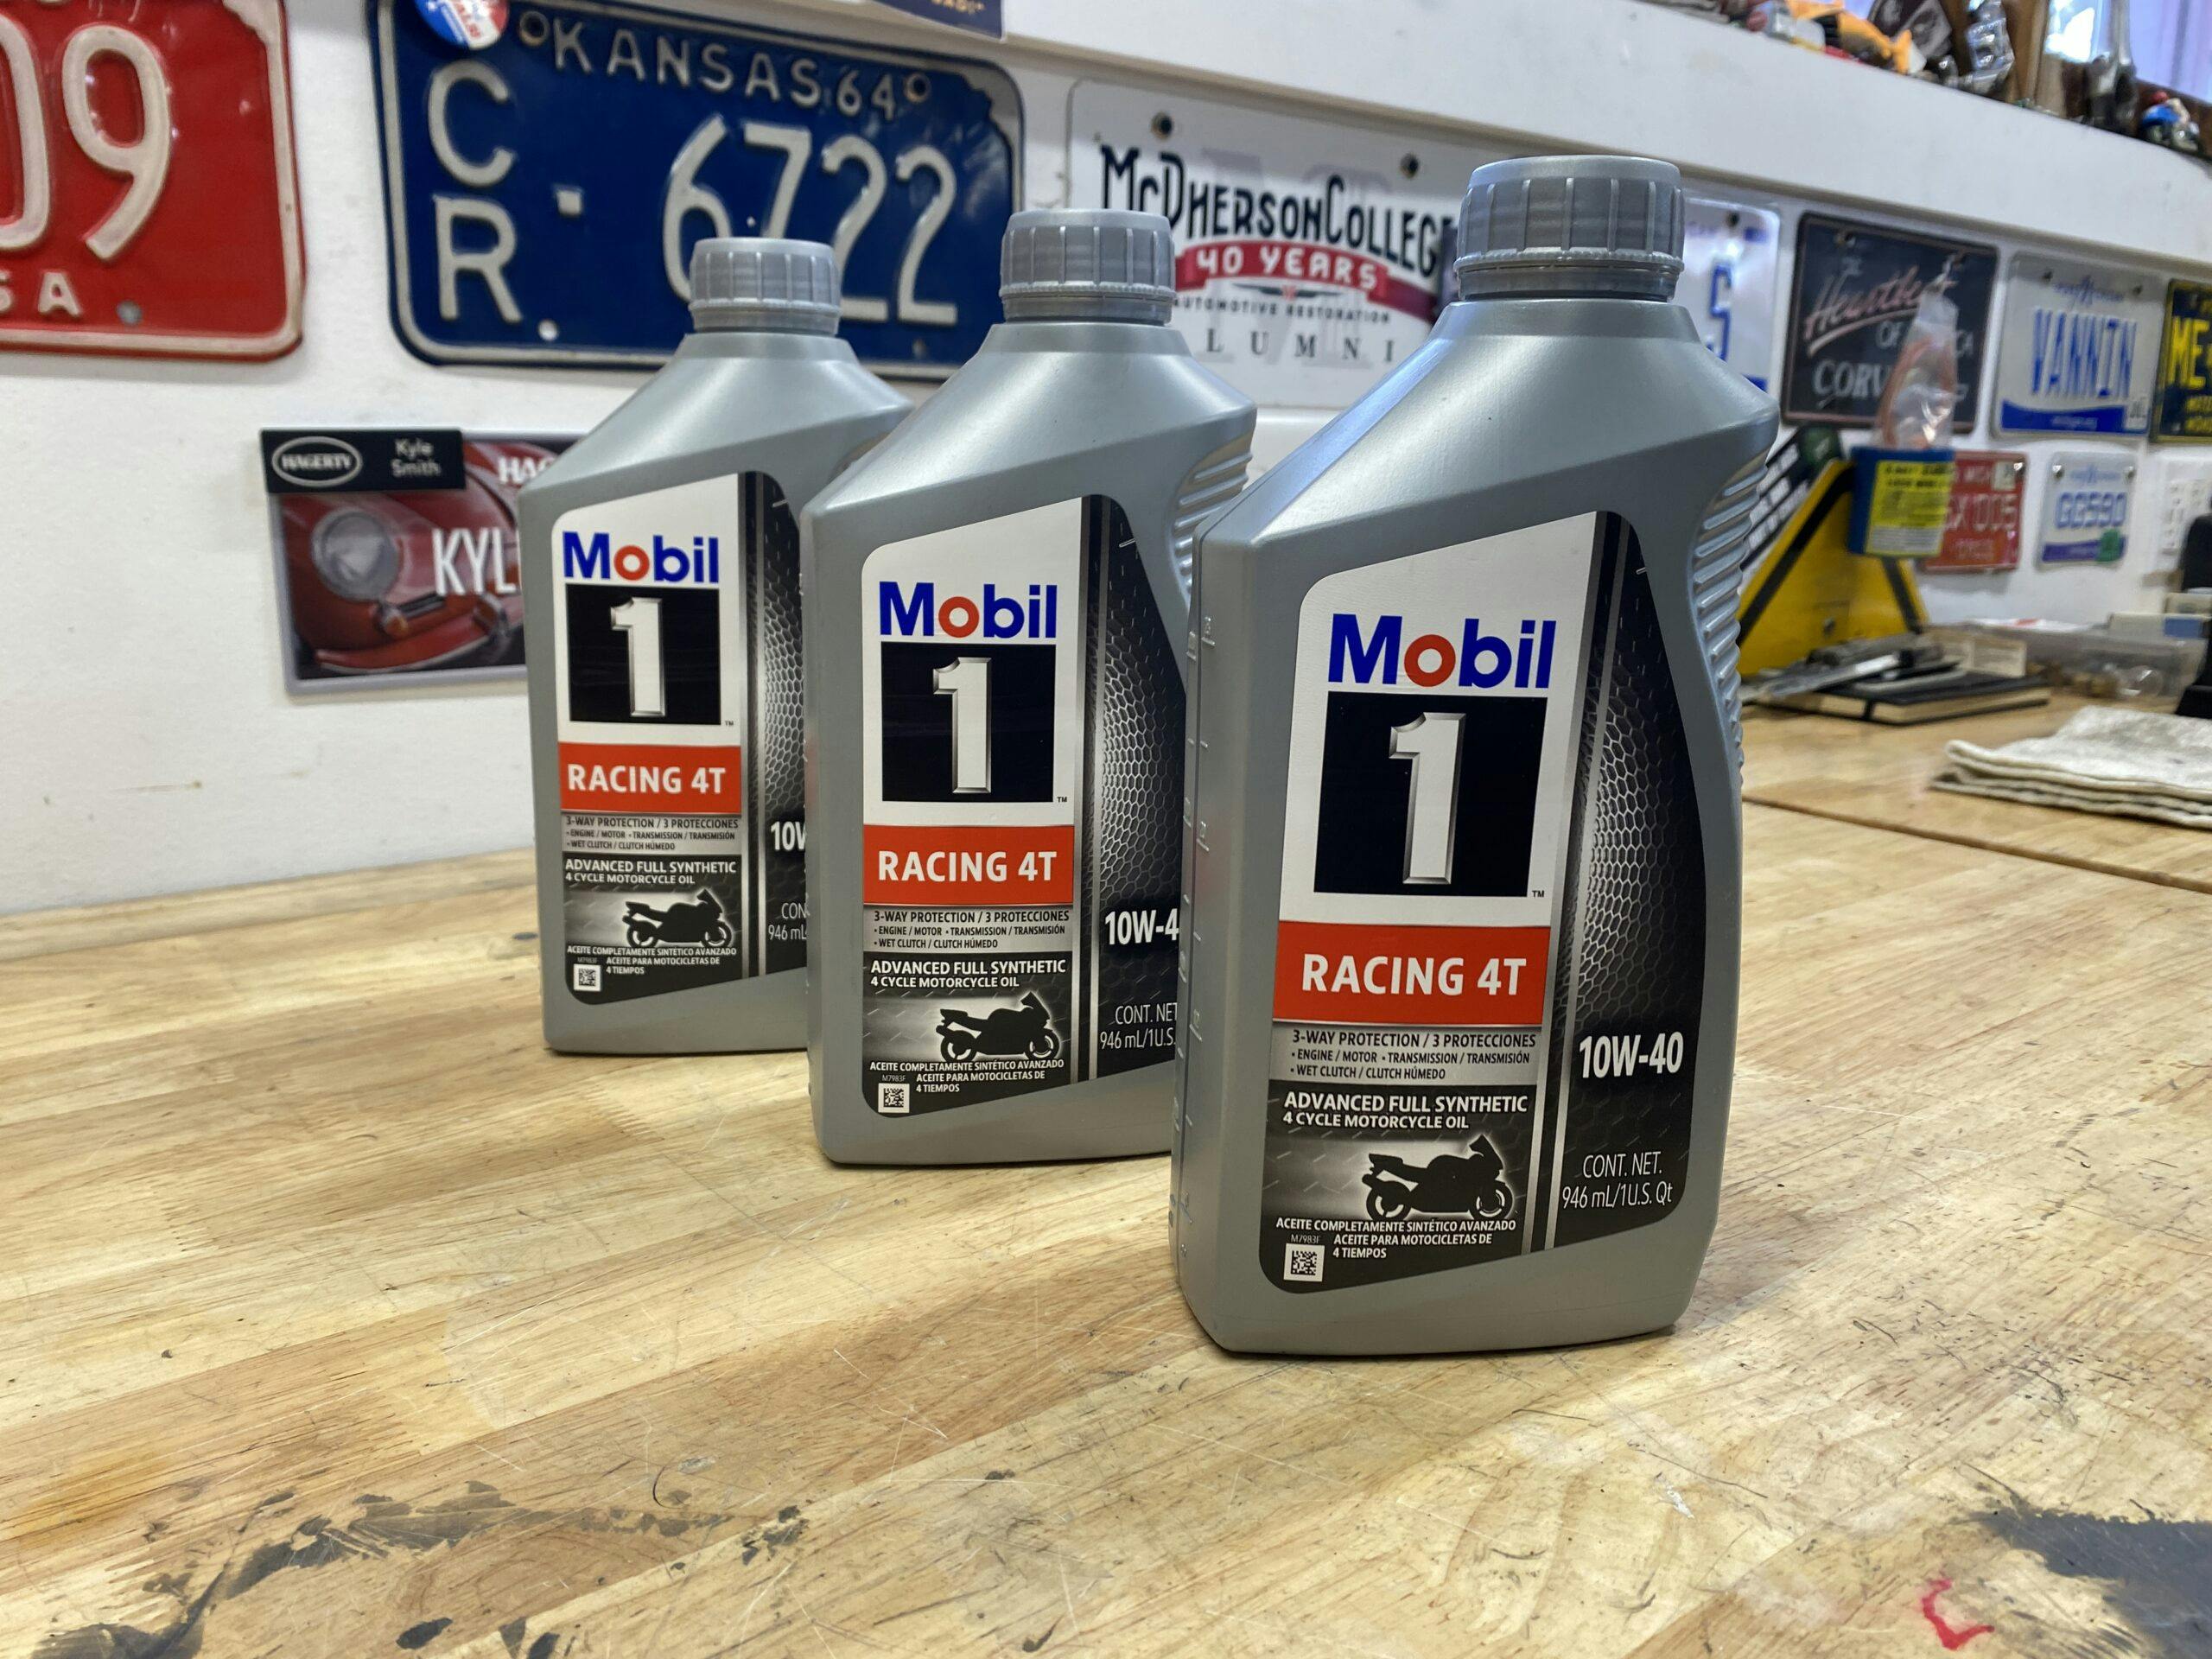 Mobil 1 race oil on workbench